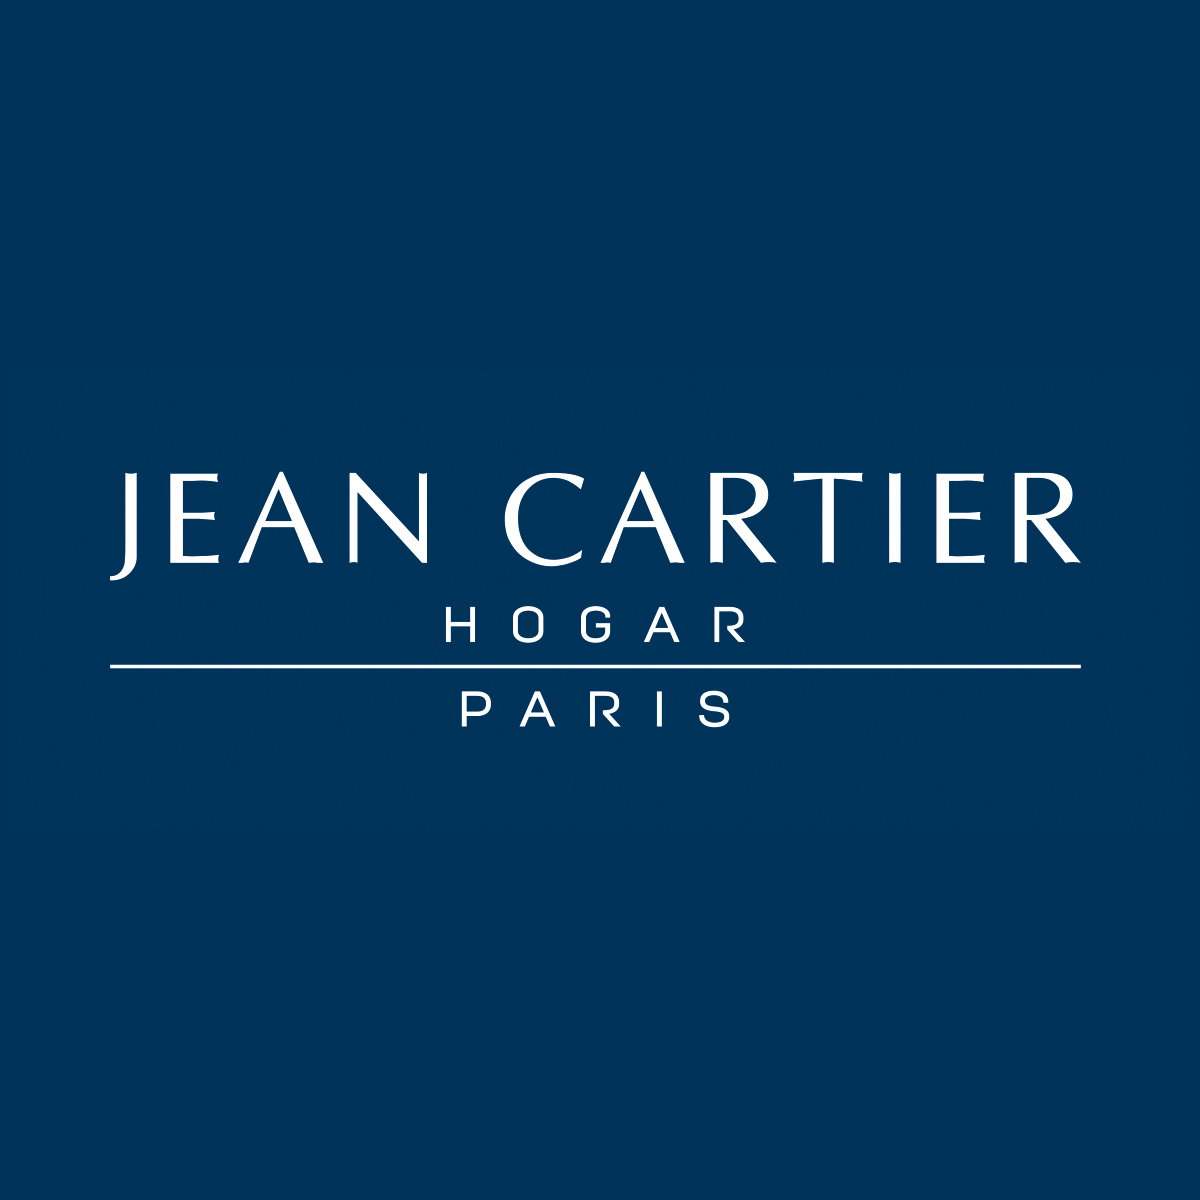 Jean Cartier